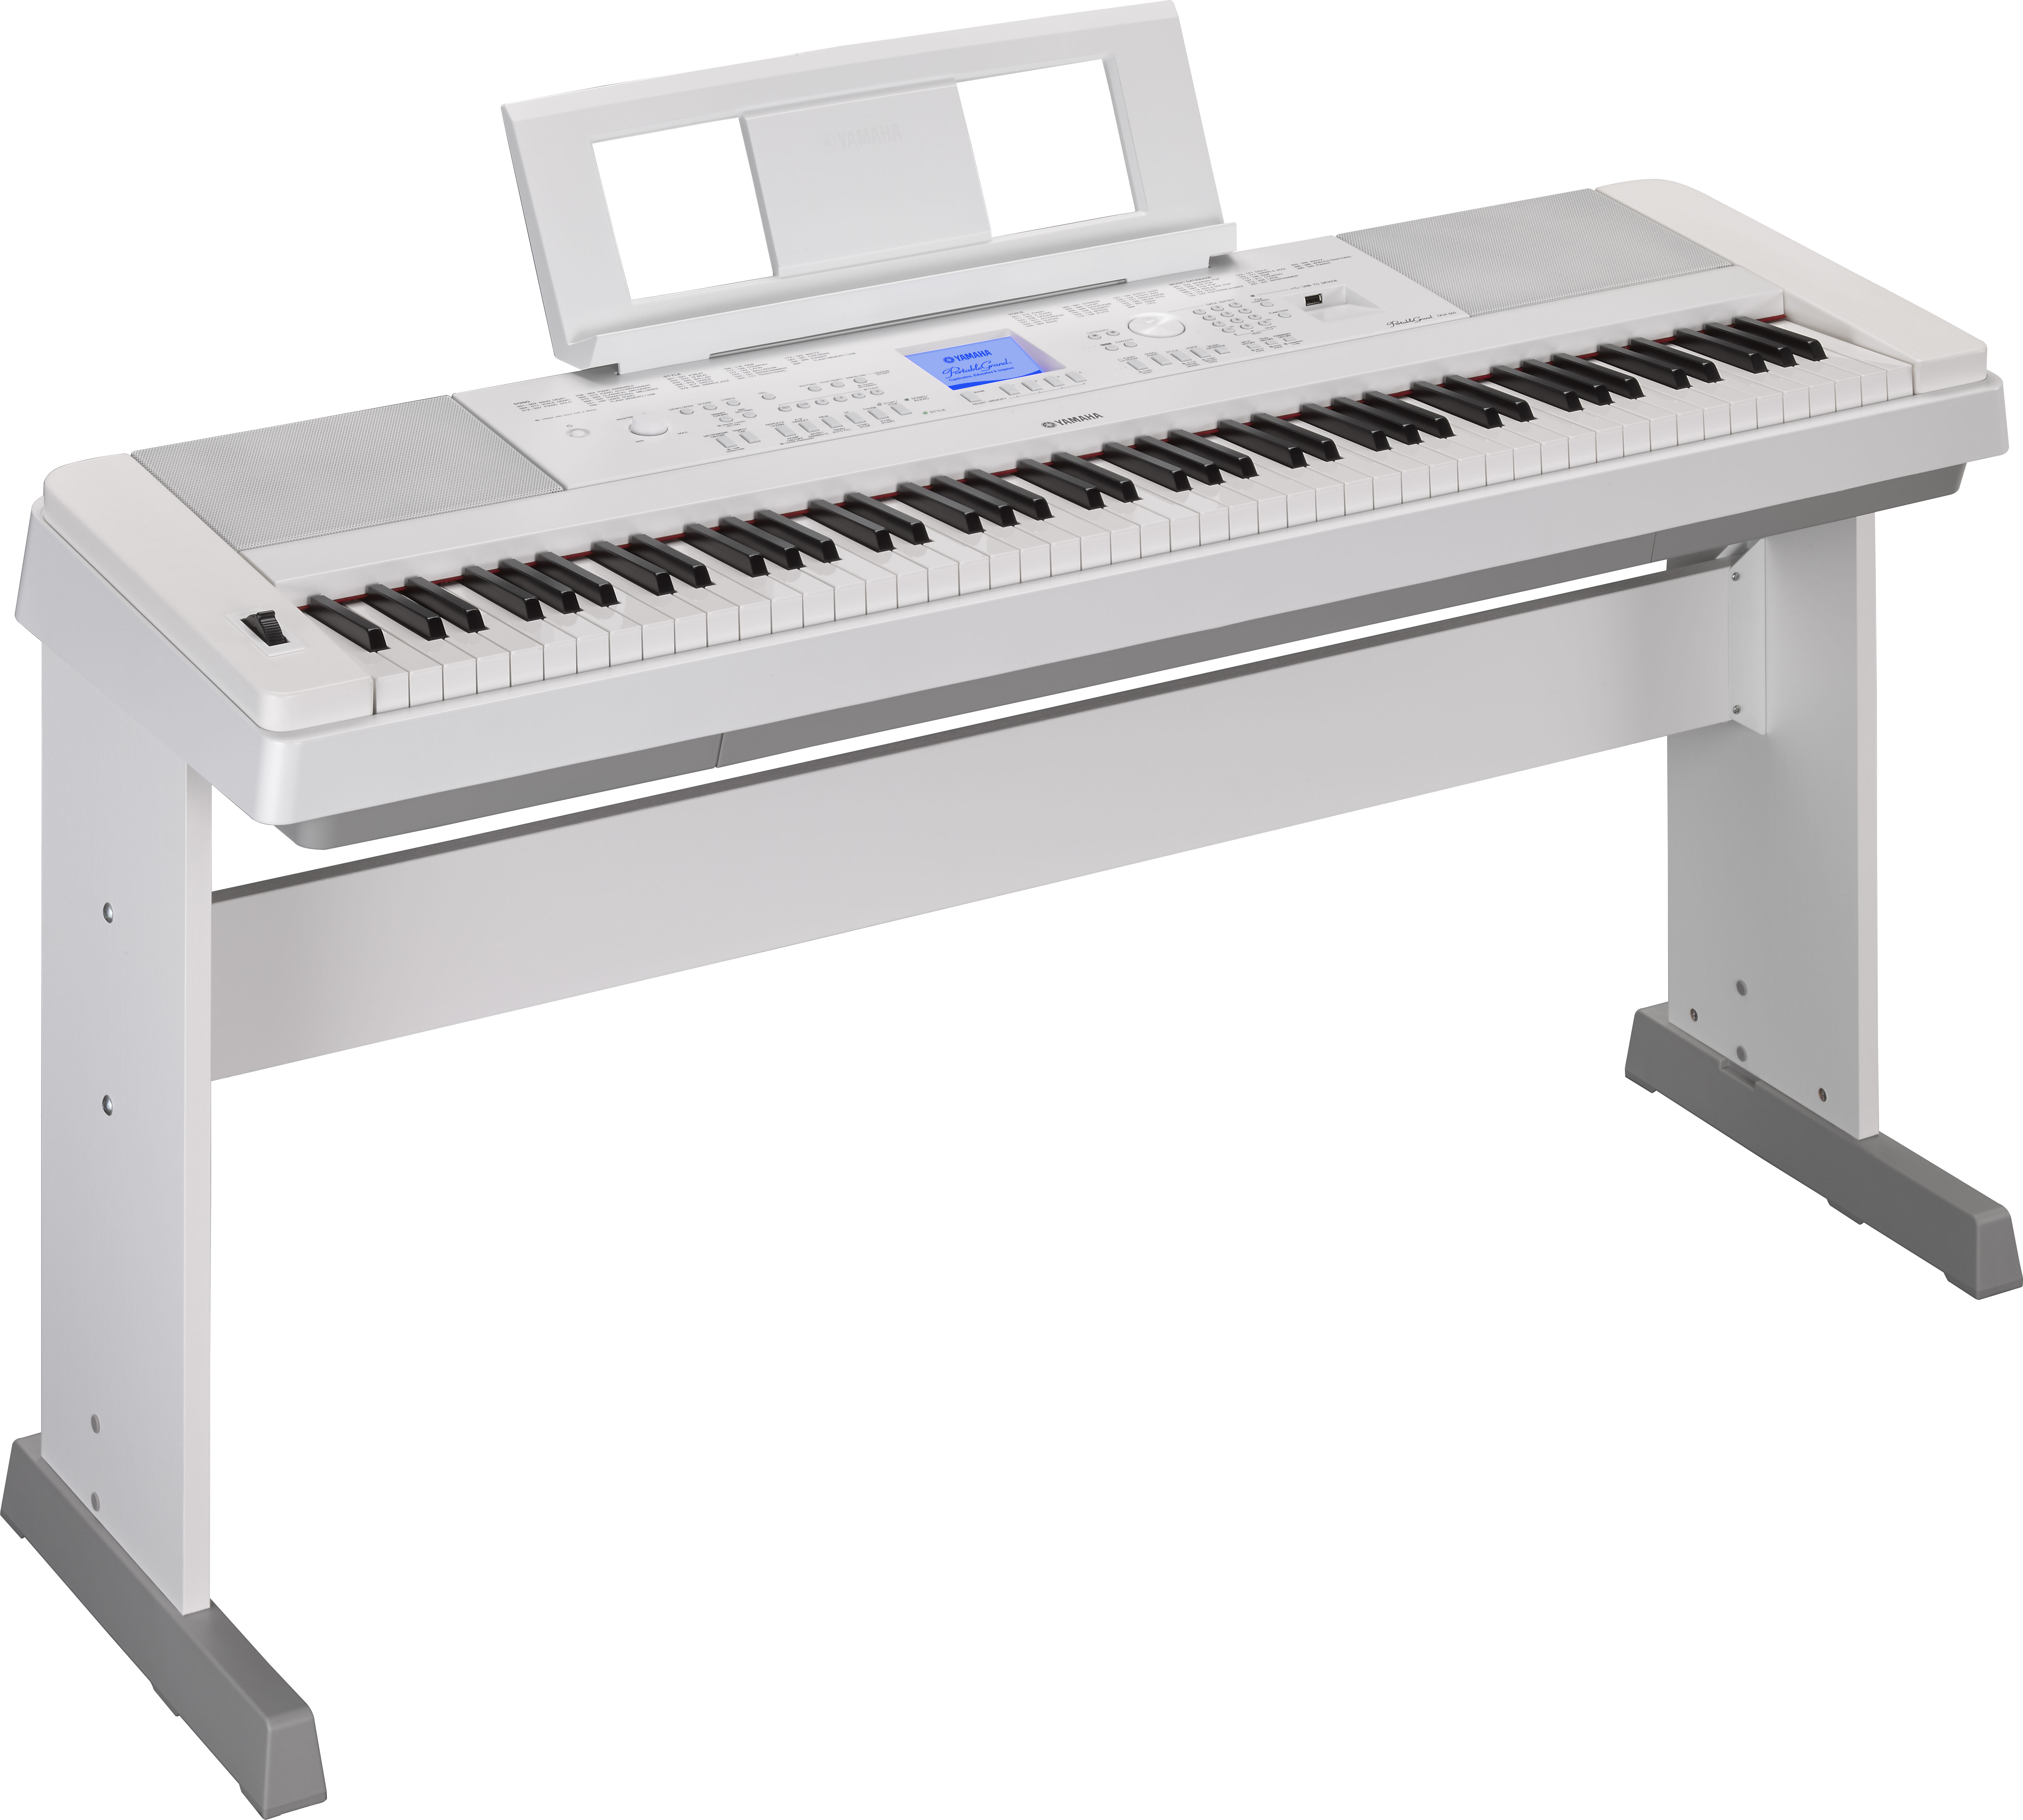 Yamaha Dgx-660 - White - Digital piano with stand - Variation 1